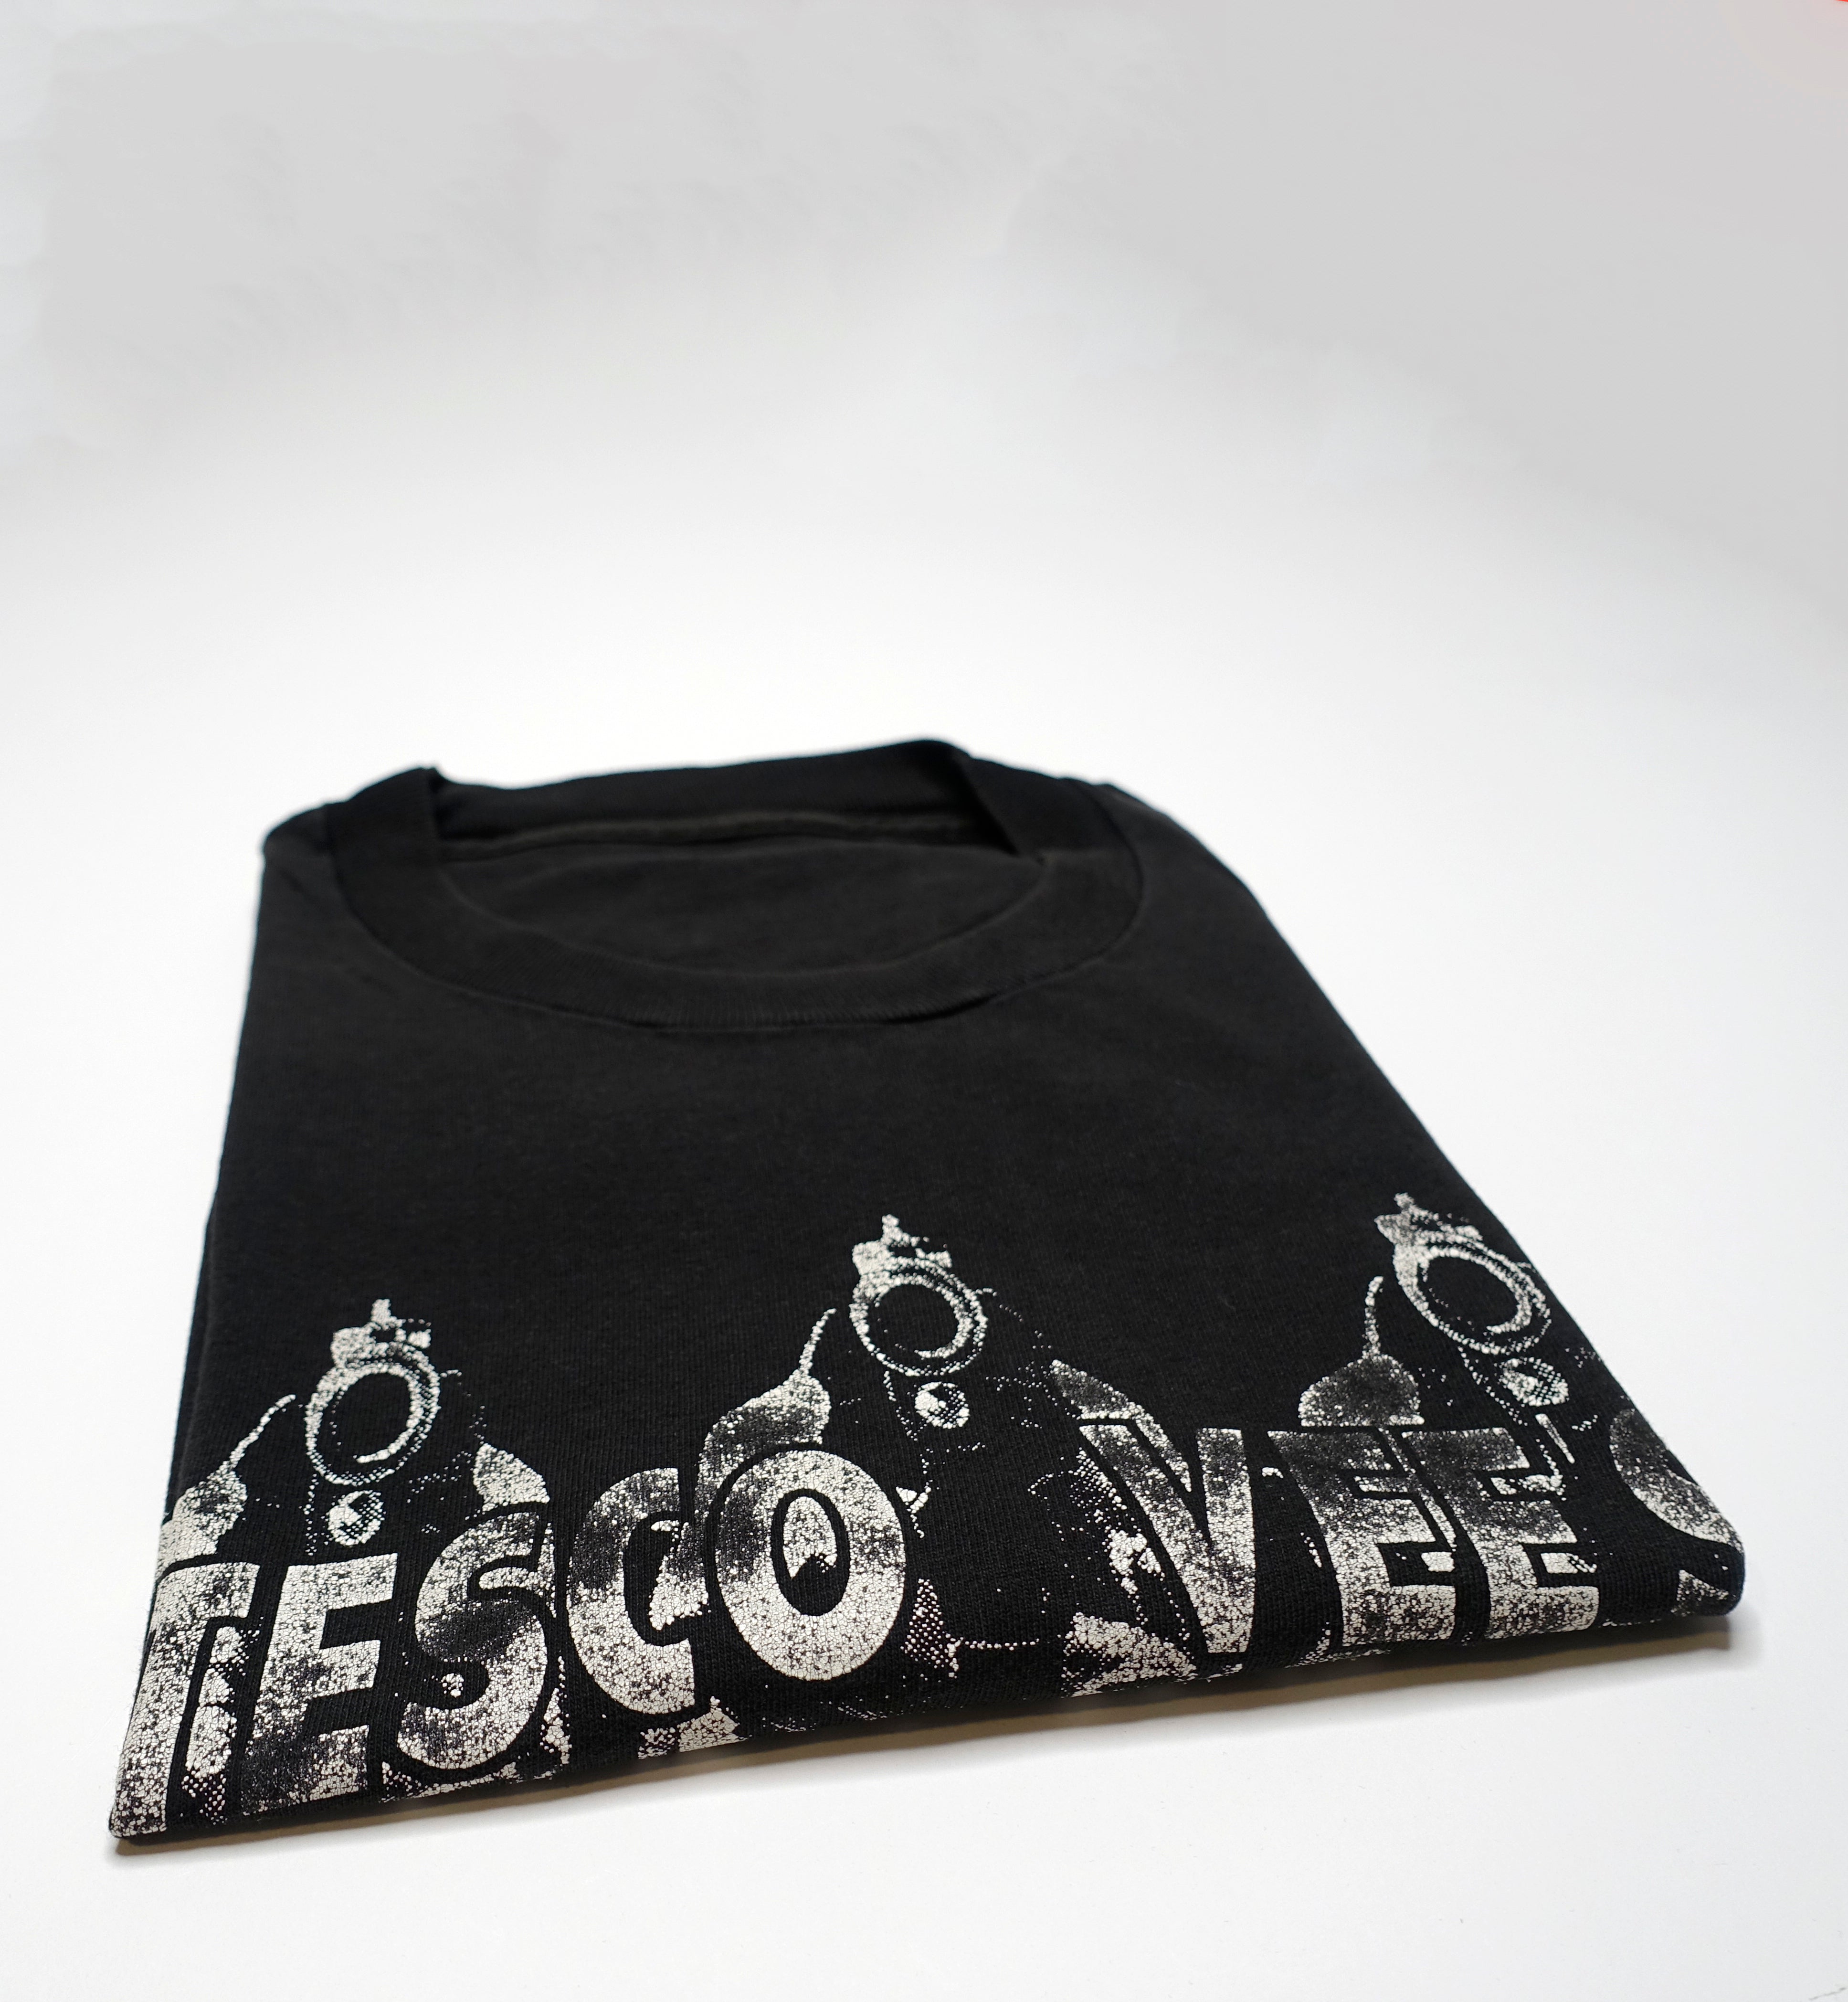 Tesco Vee - Tesco Vees Hate Police 90's Tour Shirt Size XL